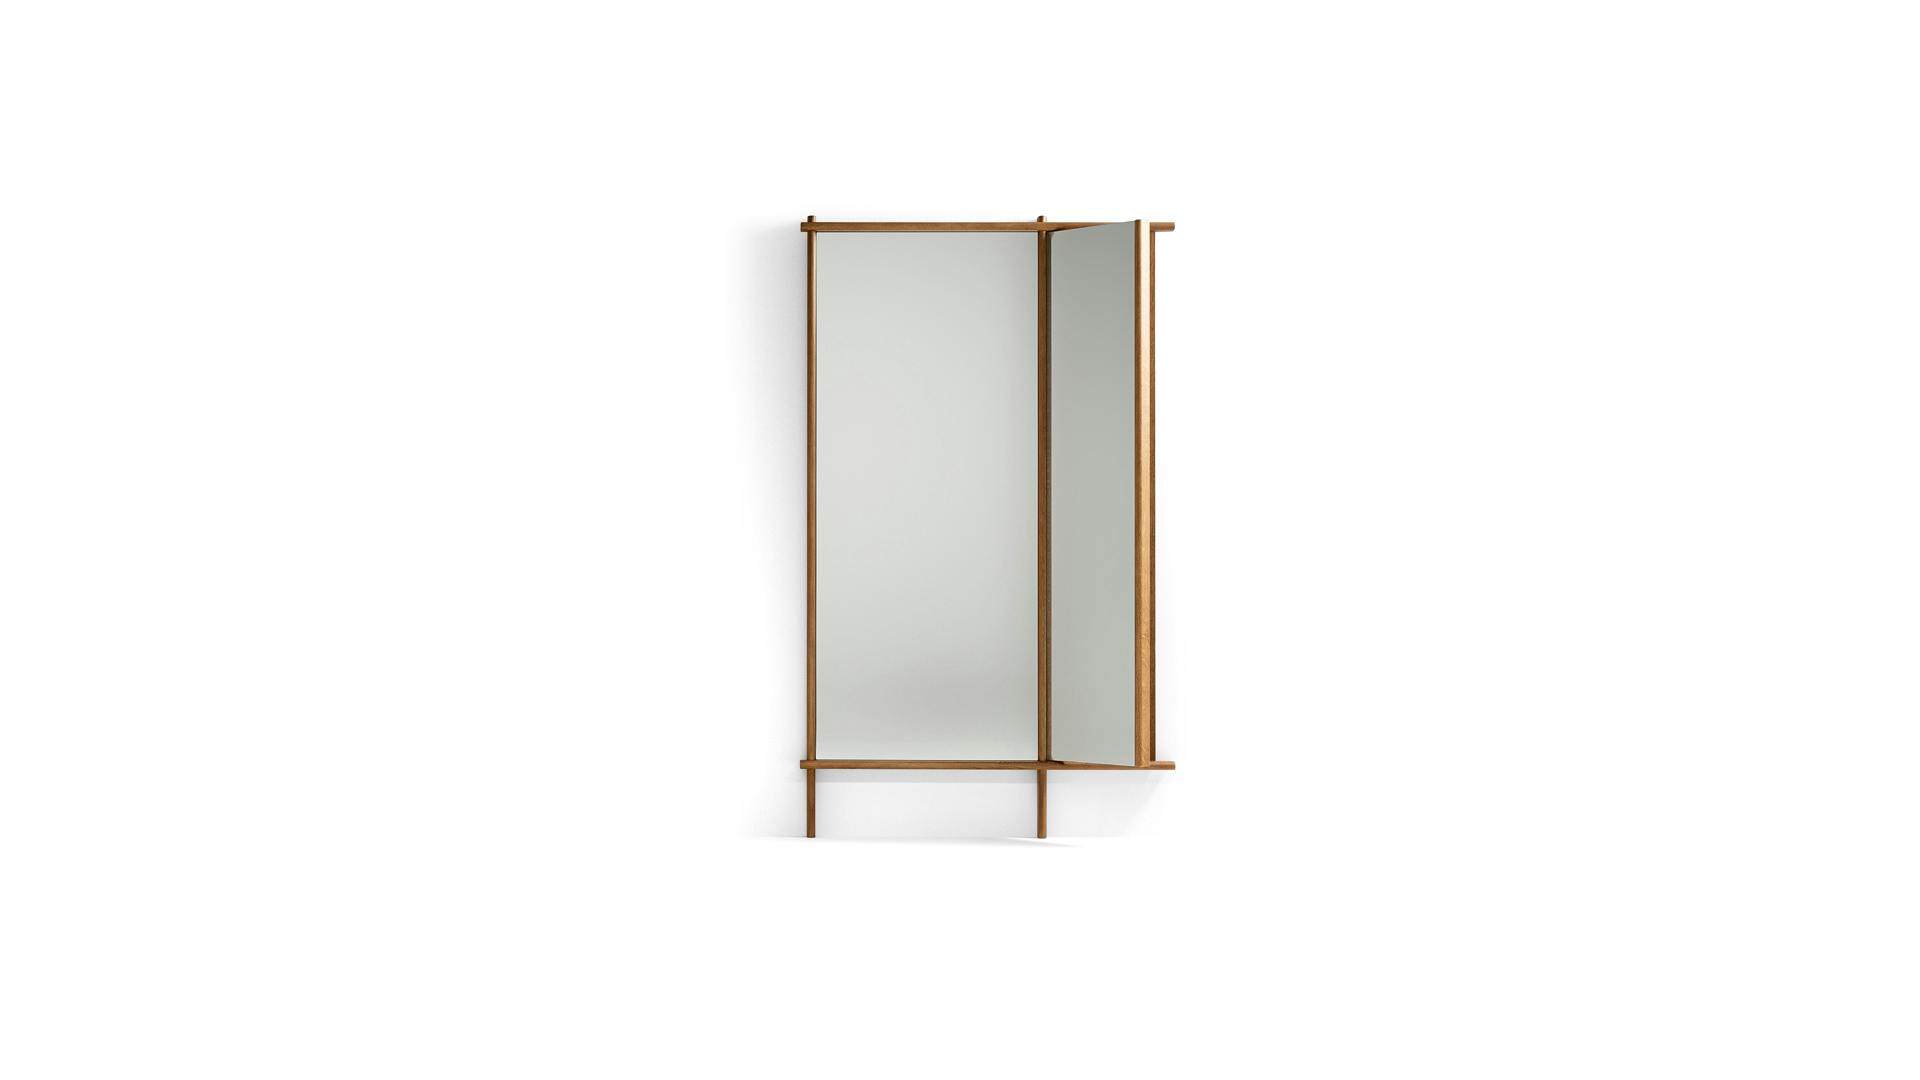 Isola mirror